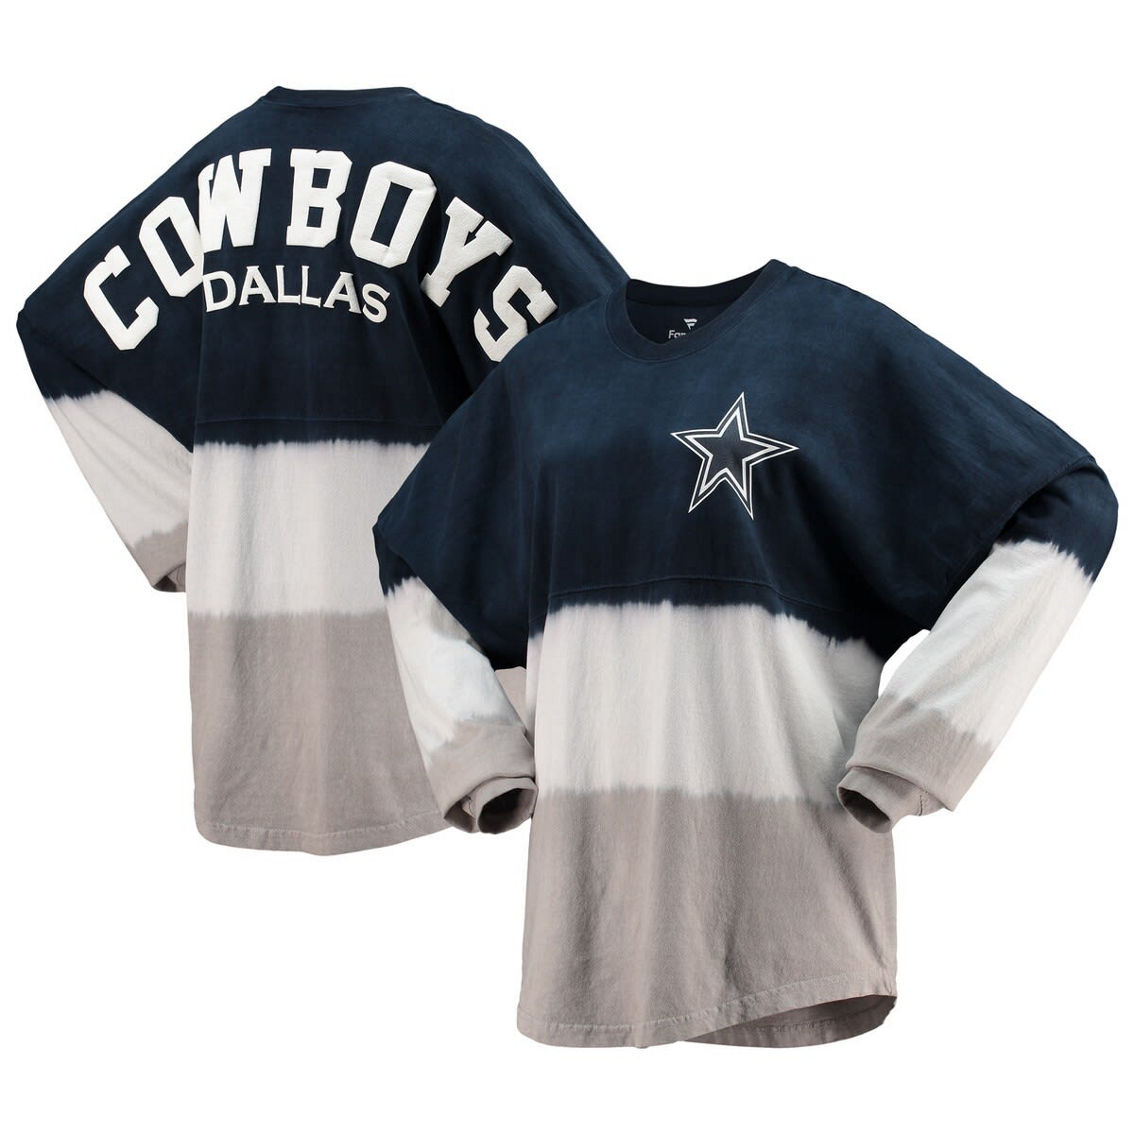 Fanatics Branded Women's Navy/white Dallas Cowboys Ombre Long Sleeve T-shirt, Fan Shop